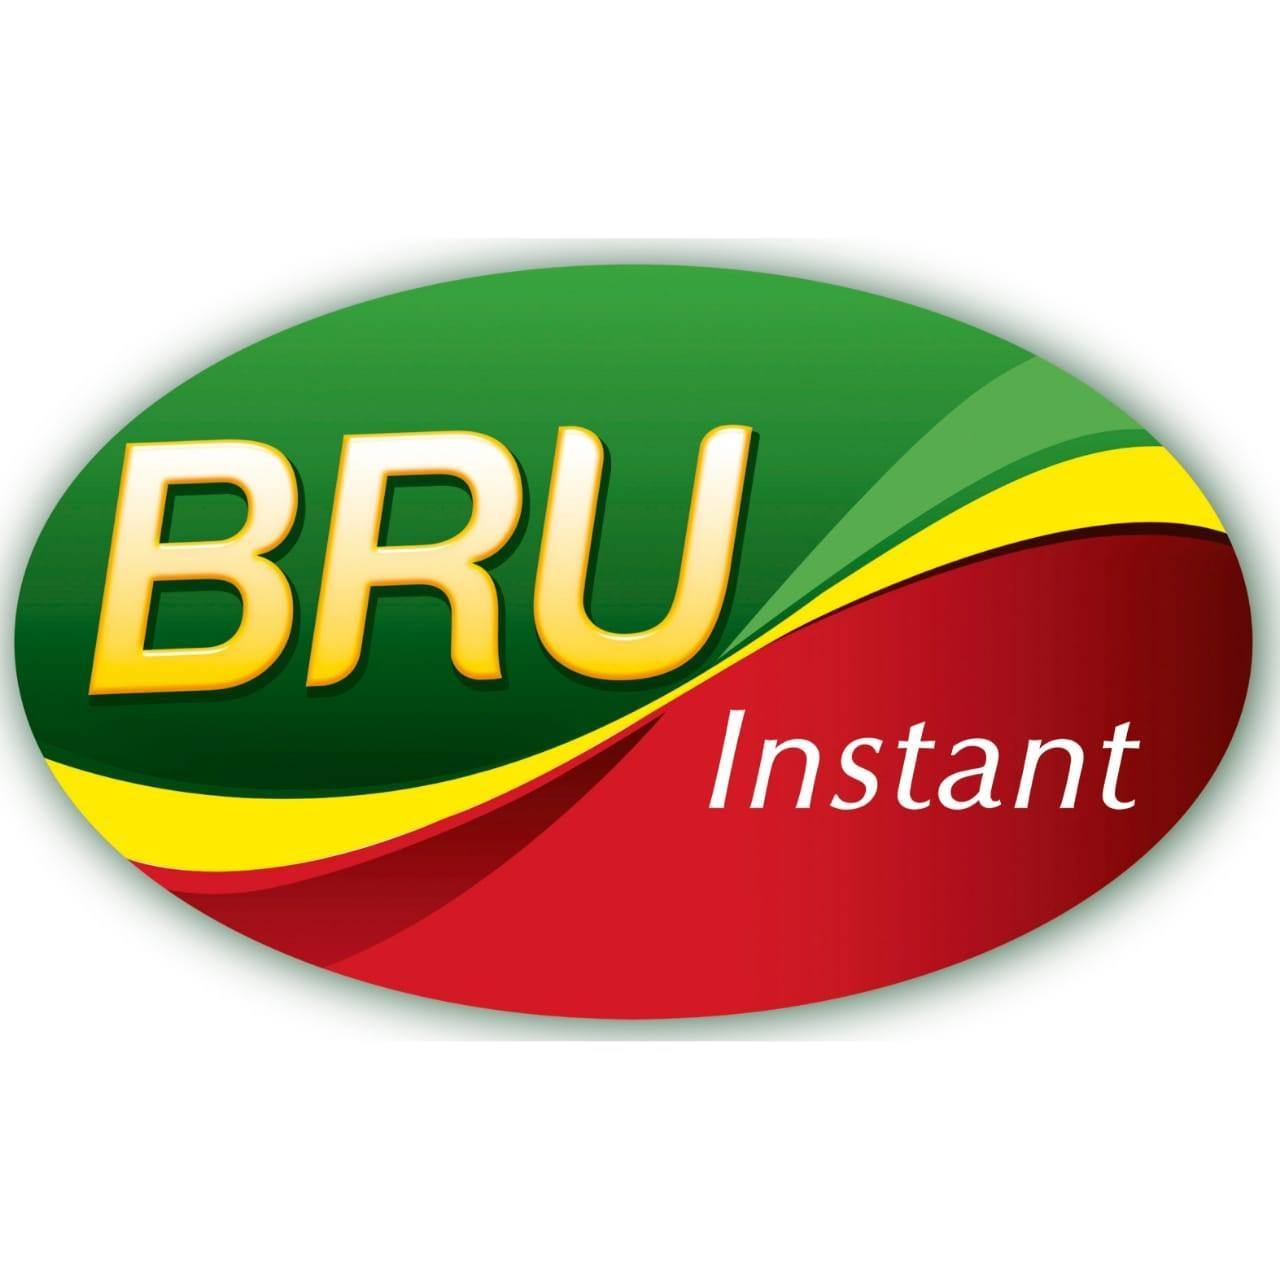 Bru Instant logo